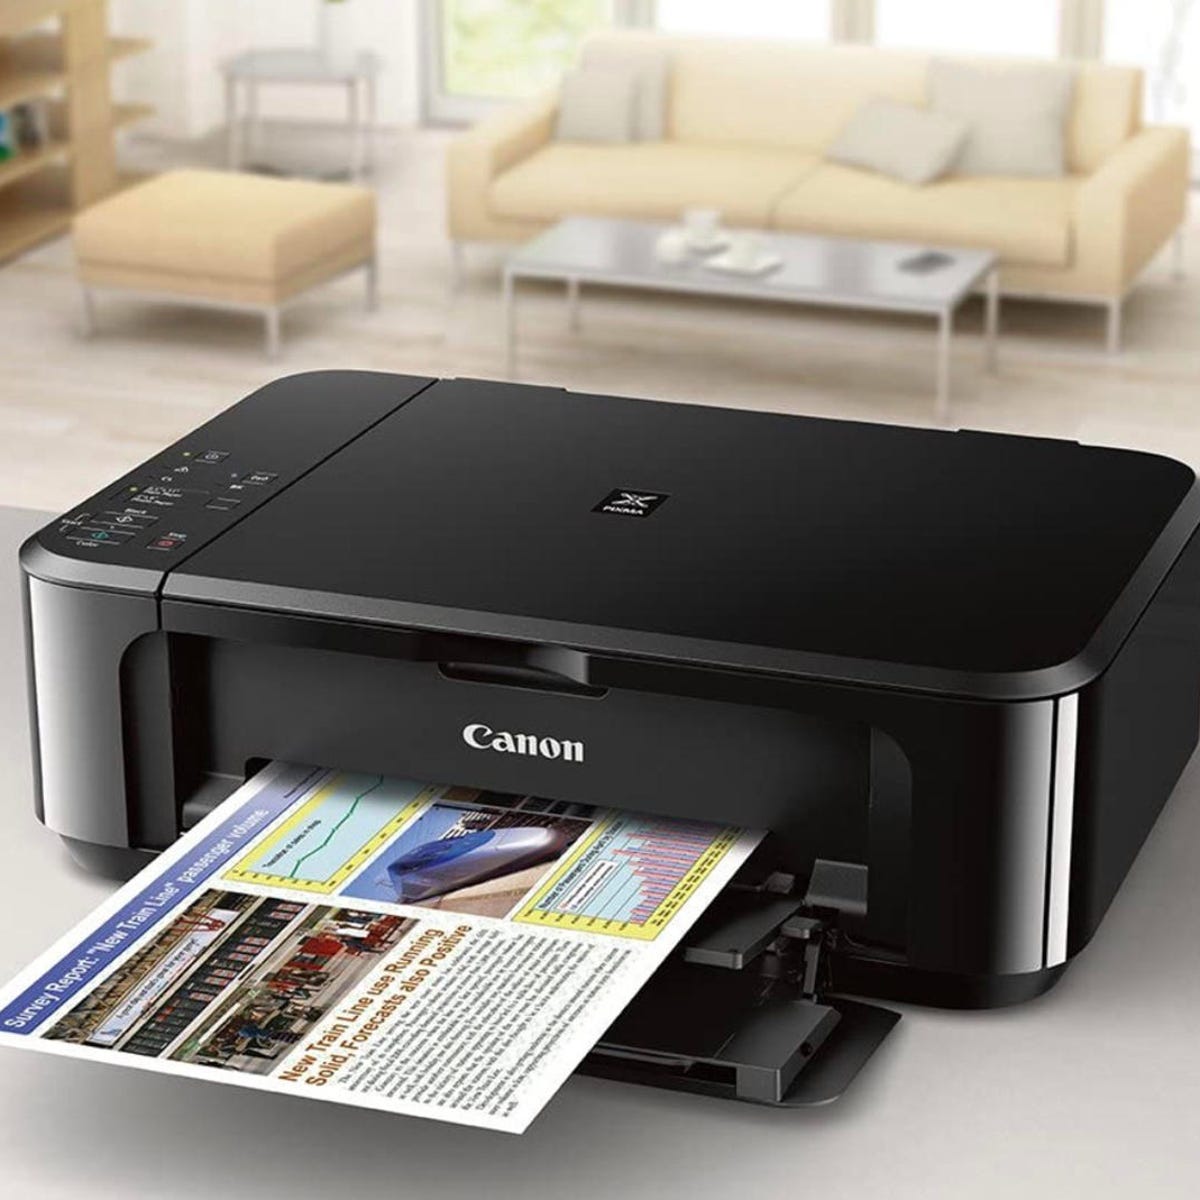 Flourish Effektiv sagde The 9 best printers of 2023: Inkjet, photo, and laser | ZDNET